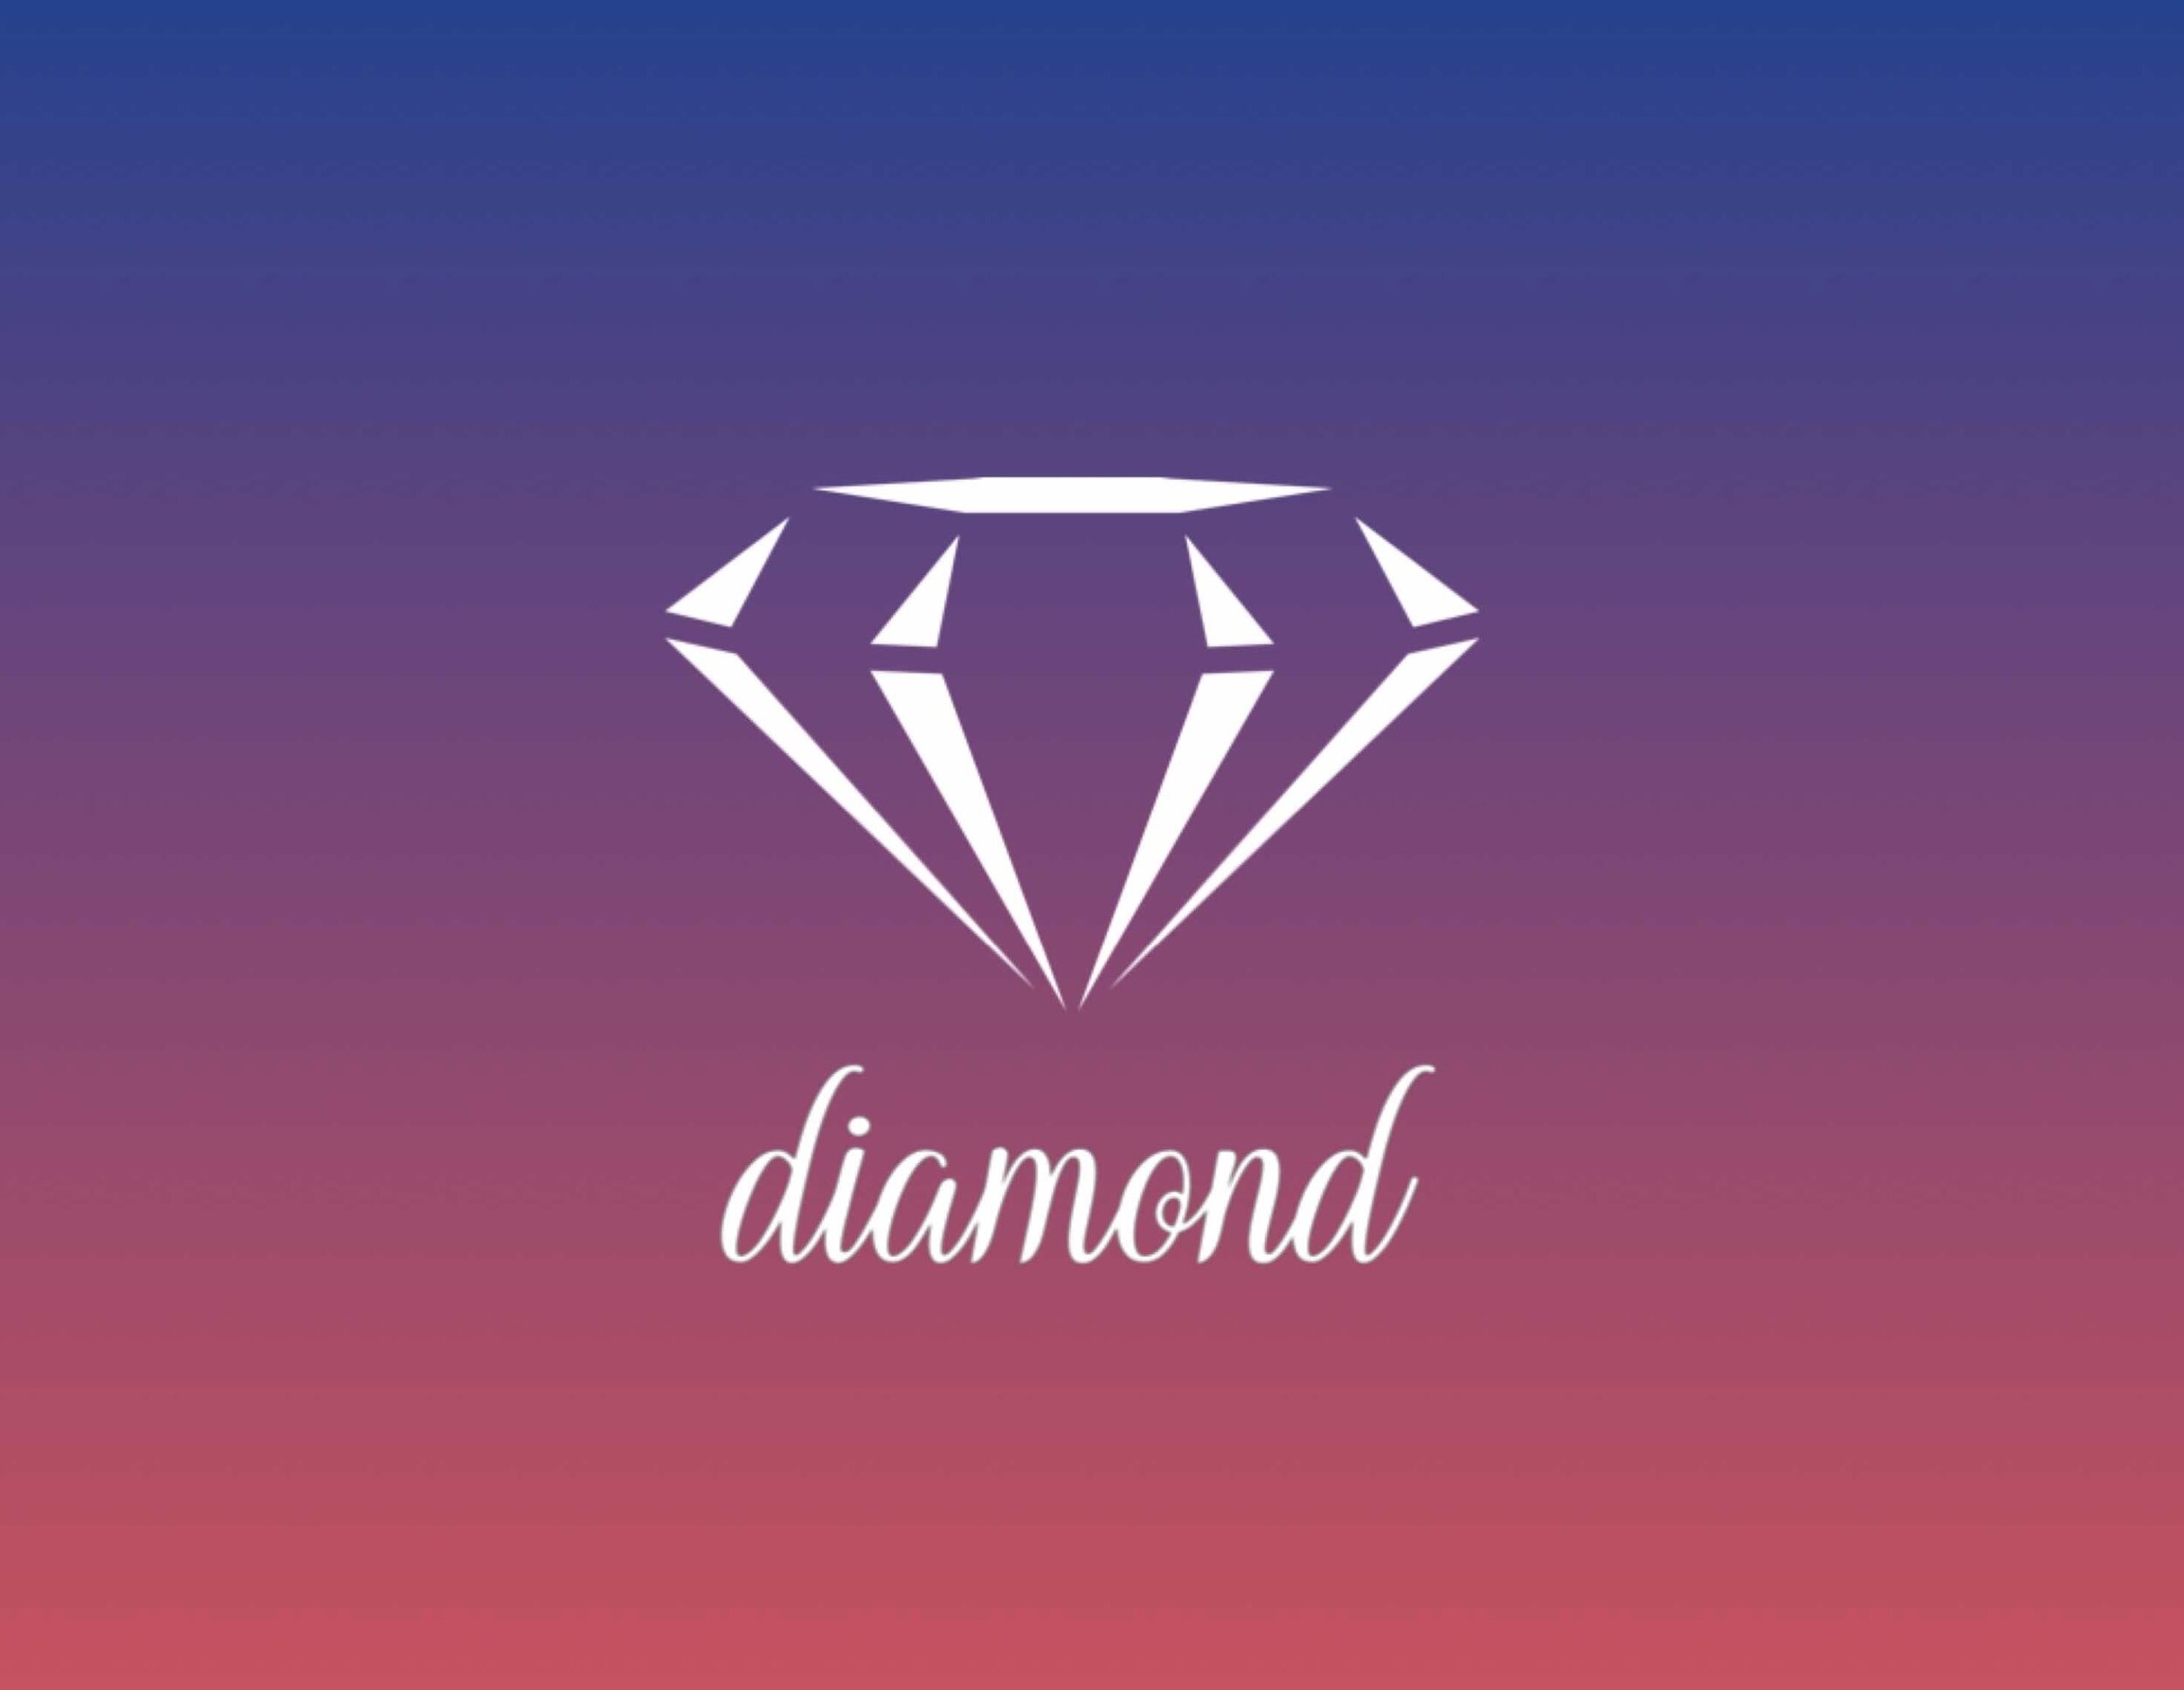 Team Dimond logo.jpg